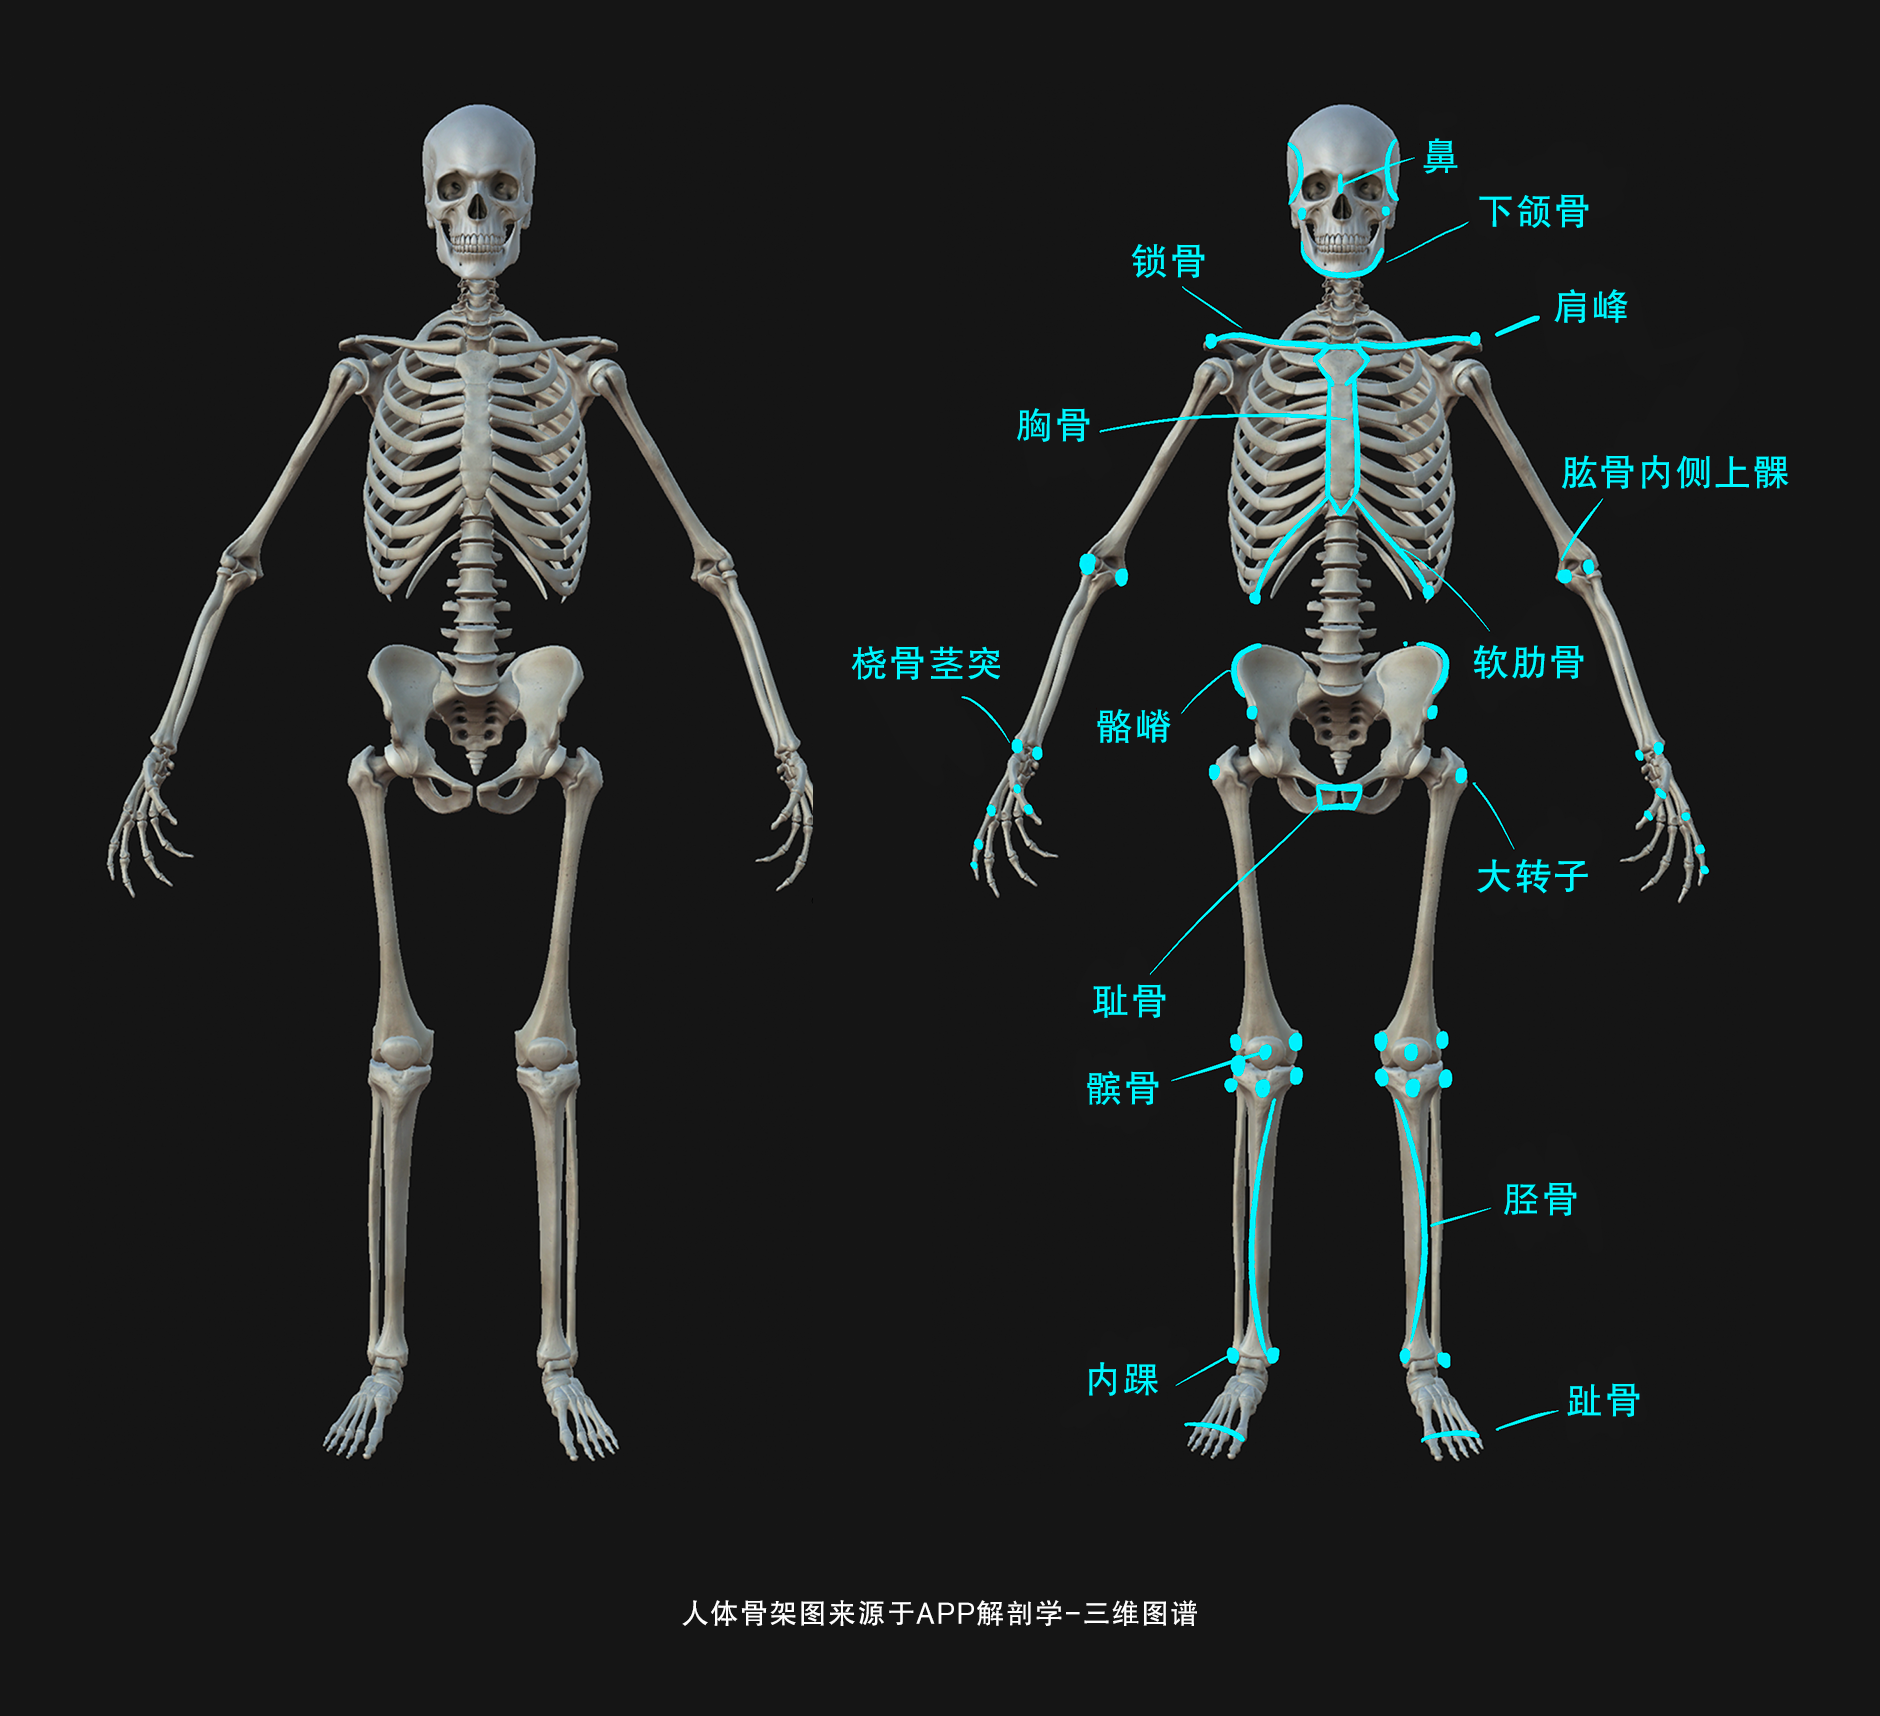 Complete Anatomy这款解剖学APP有人买过吗？和3D Body比怎么样？ - 知乎